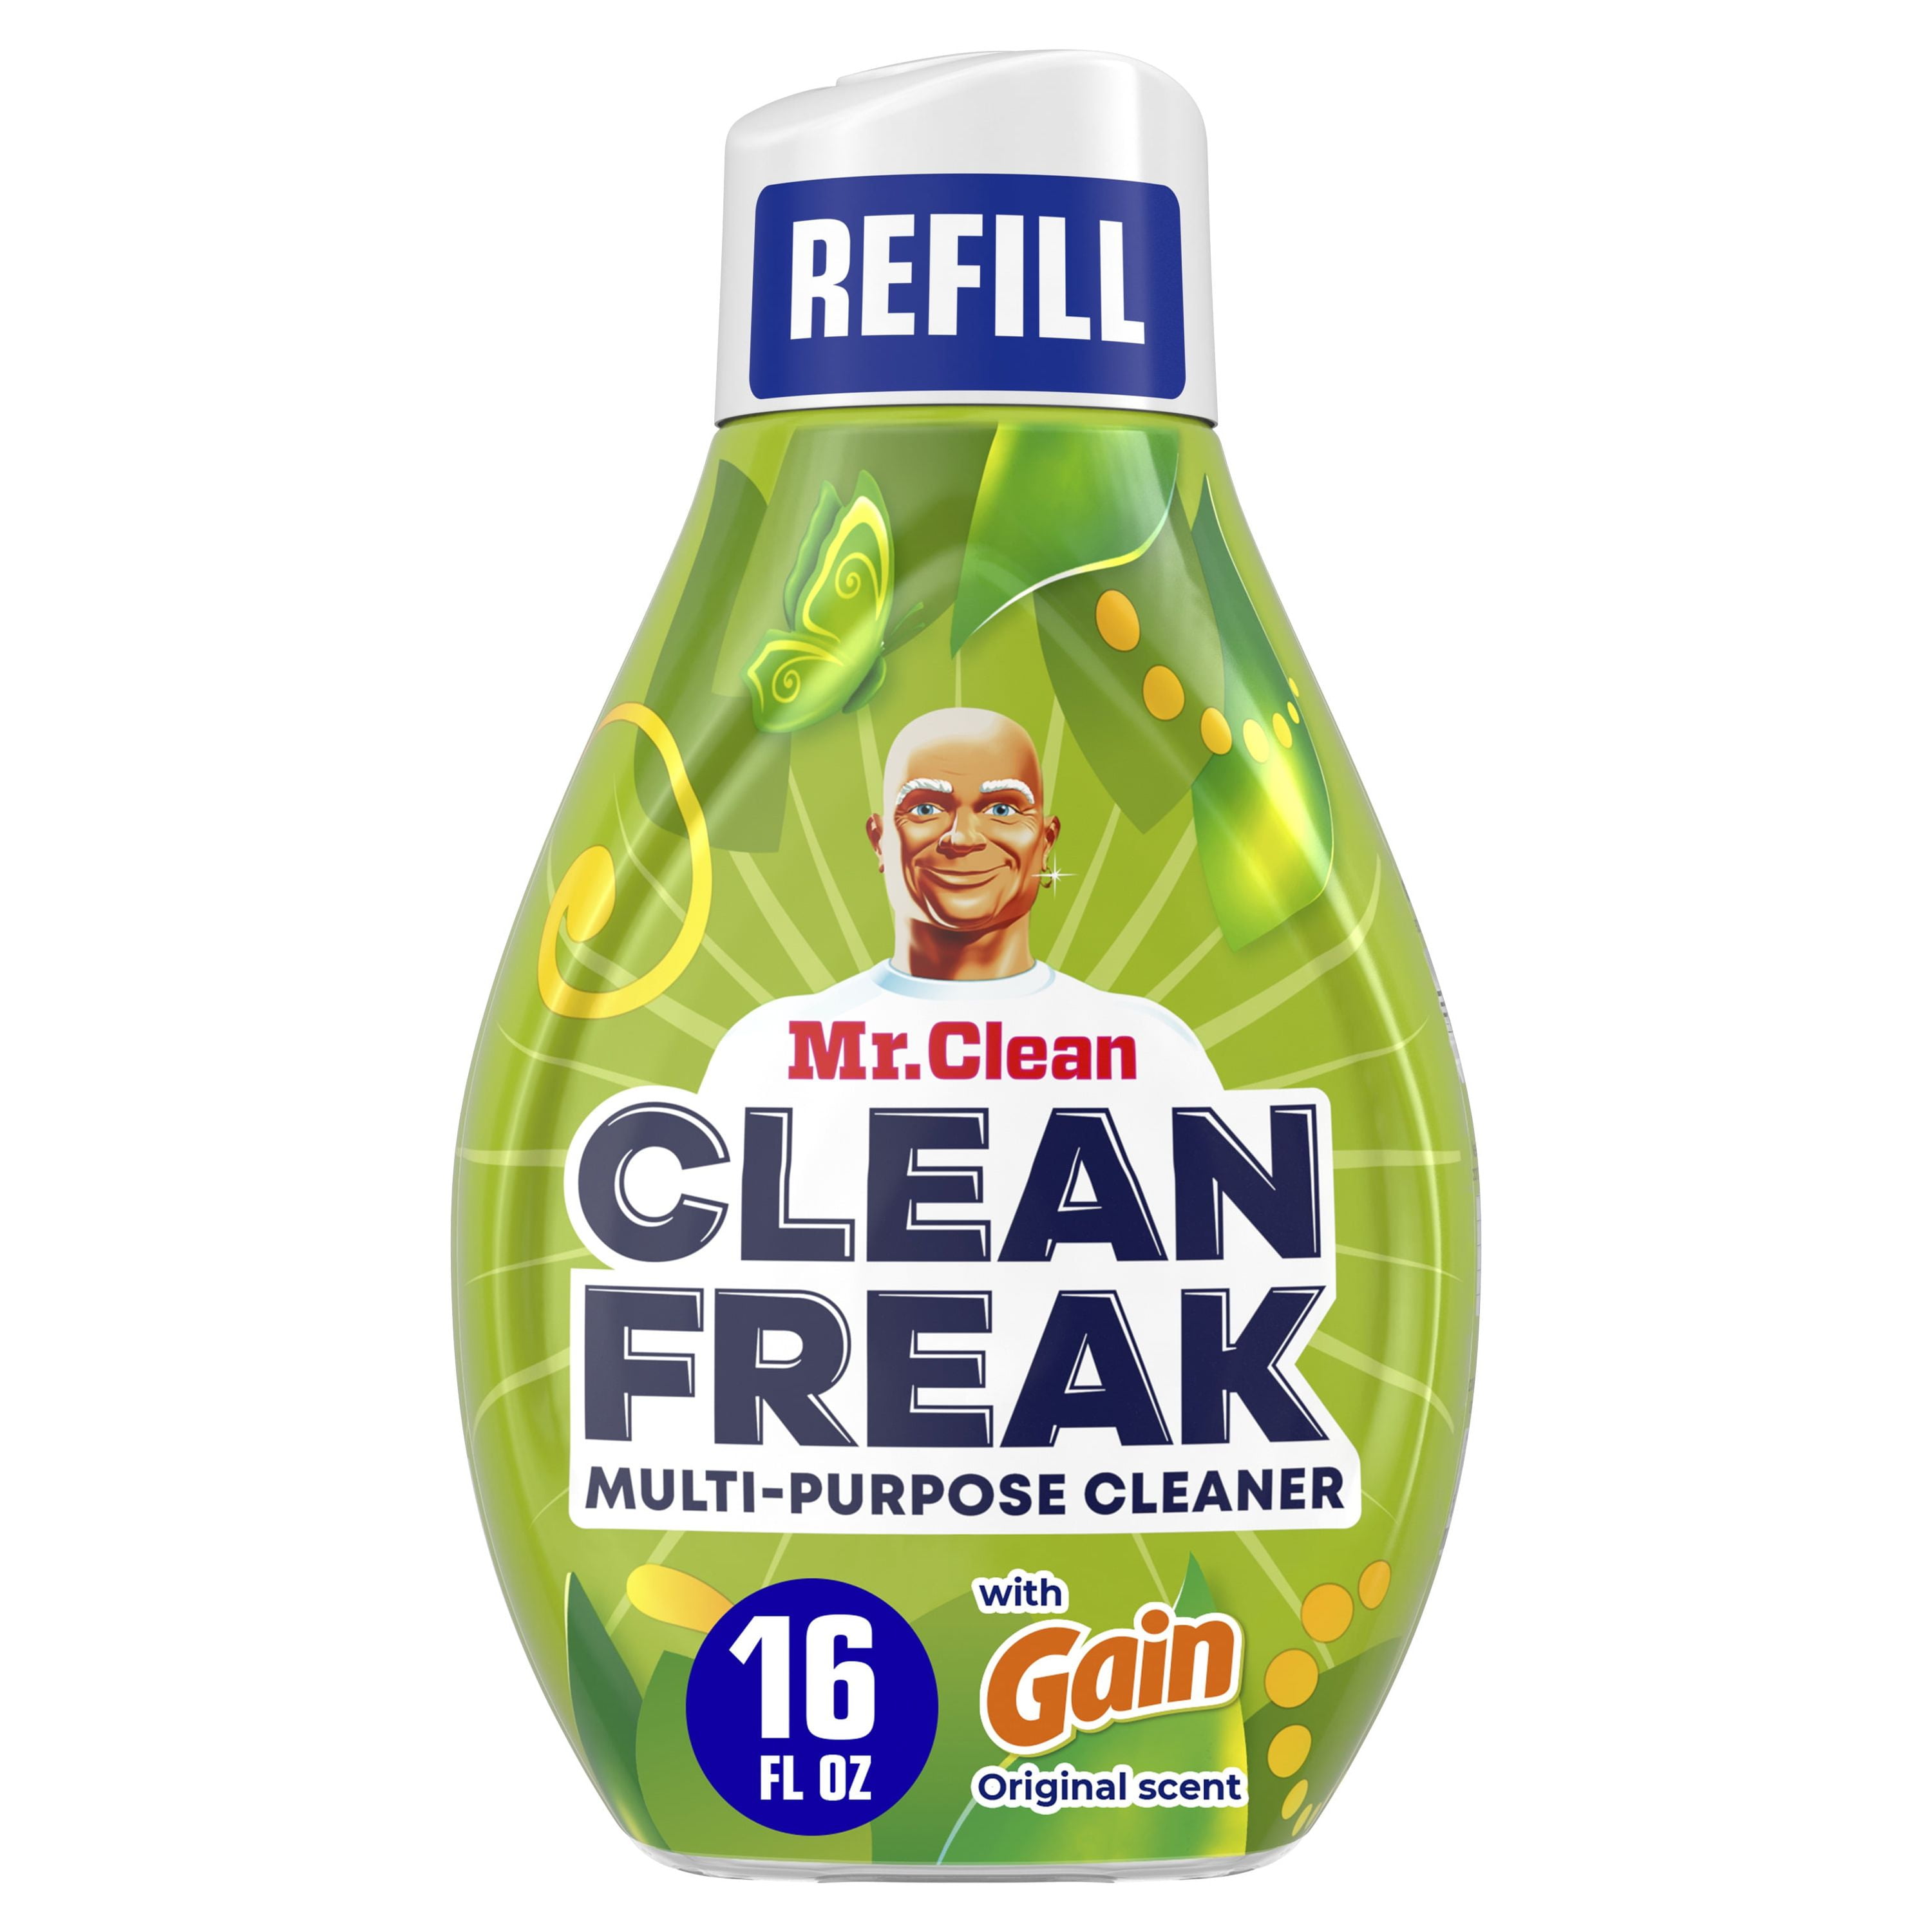 Mr. Clean Deep Cleaning Mist, with Original Gain Scent, Clean Freak, Refill - 16 fl oz